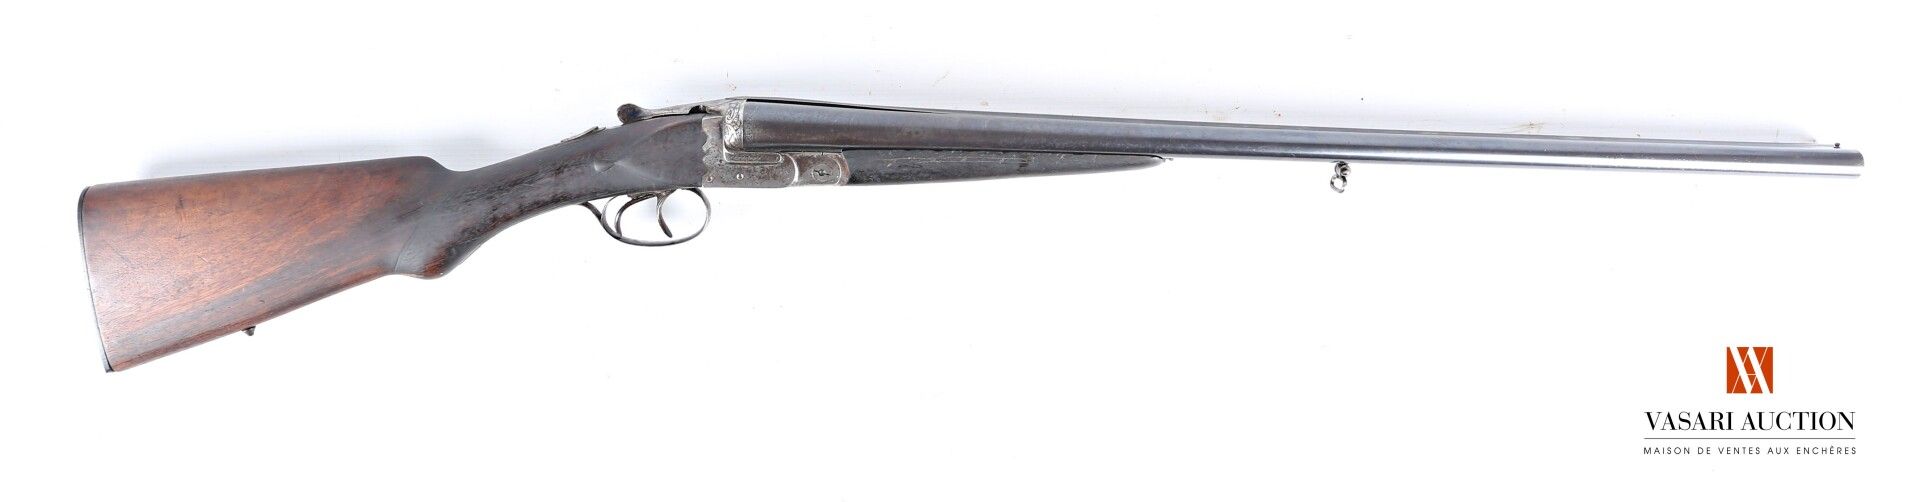 Null Hammerlose Jagdgewehr aus Stephanois HELICE Kaliber 16-65, nebeneinander li&hellip;